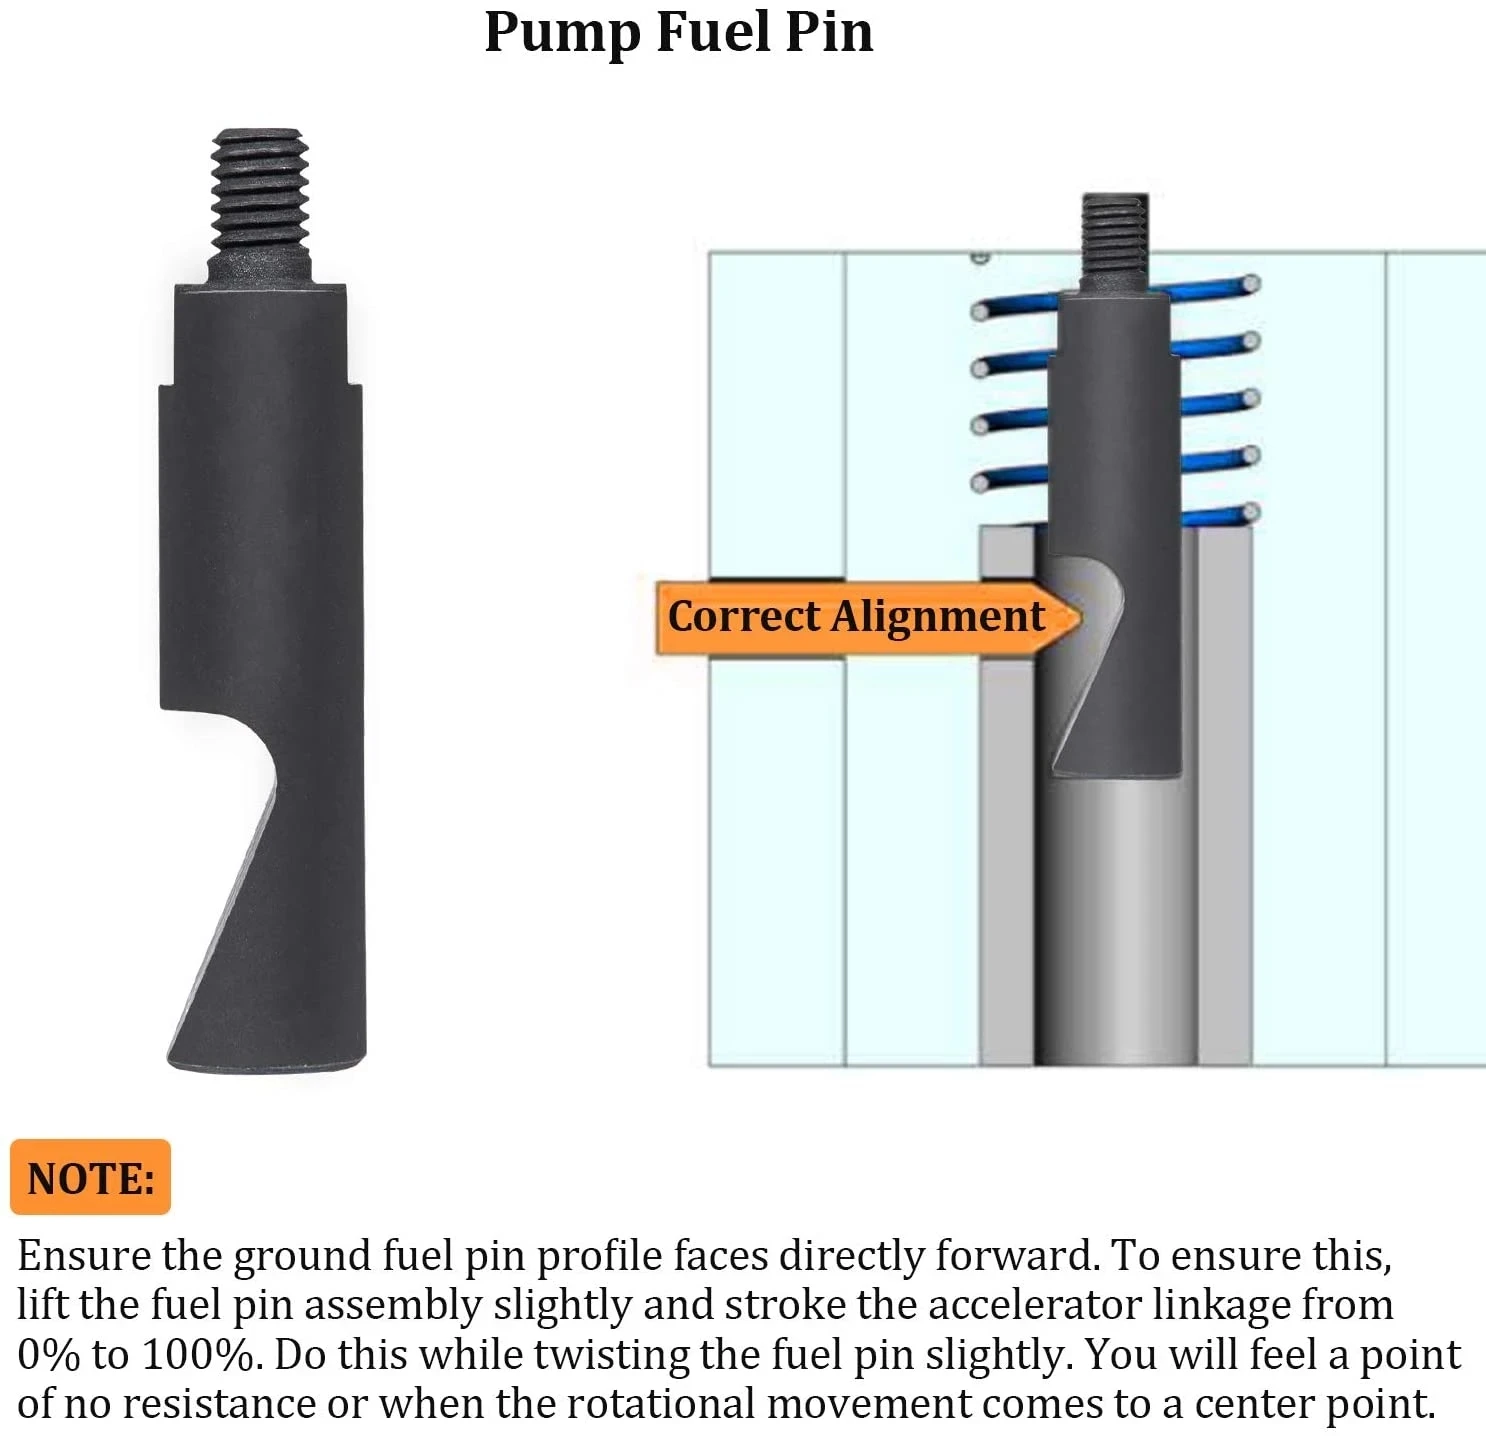 TM (4 Pcs/Set) Pump Fuel Pin & 3200 RPM Governor Spring Kit for 1988-1993 Dodge Cummins 5.9L VE Injection Pumps